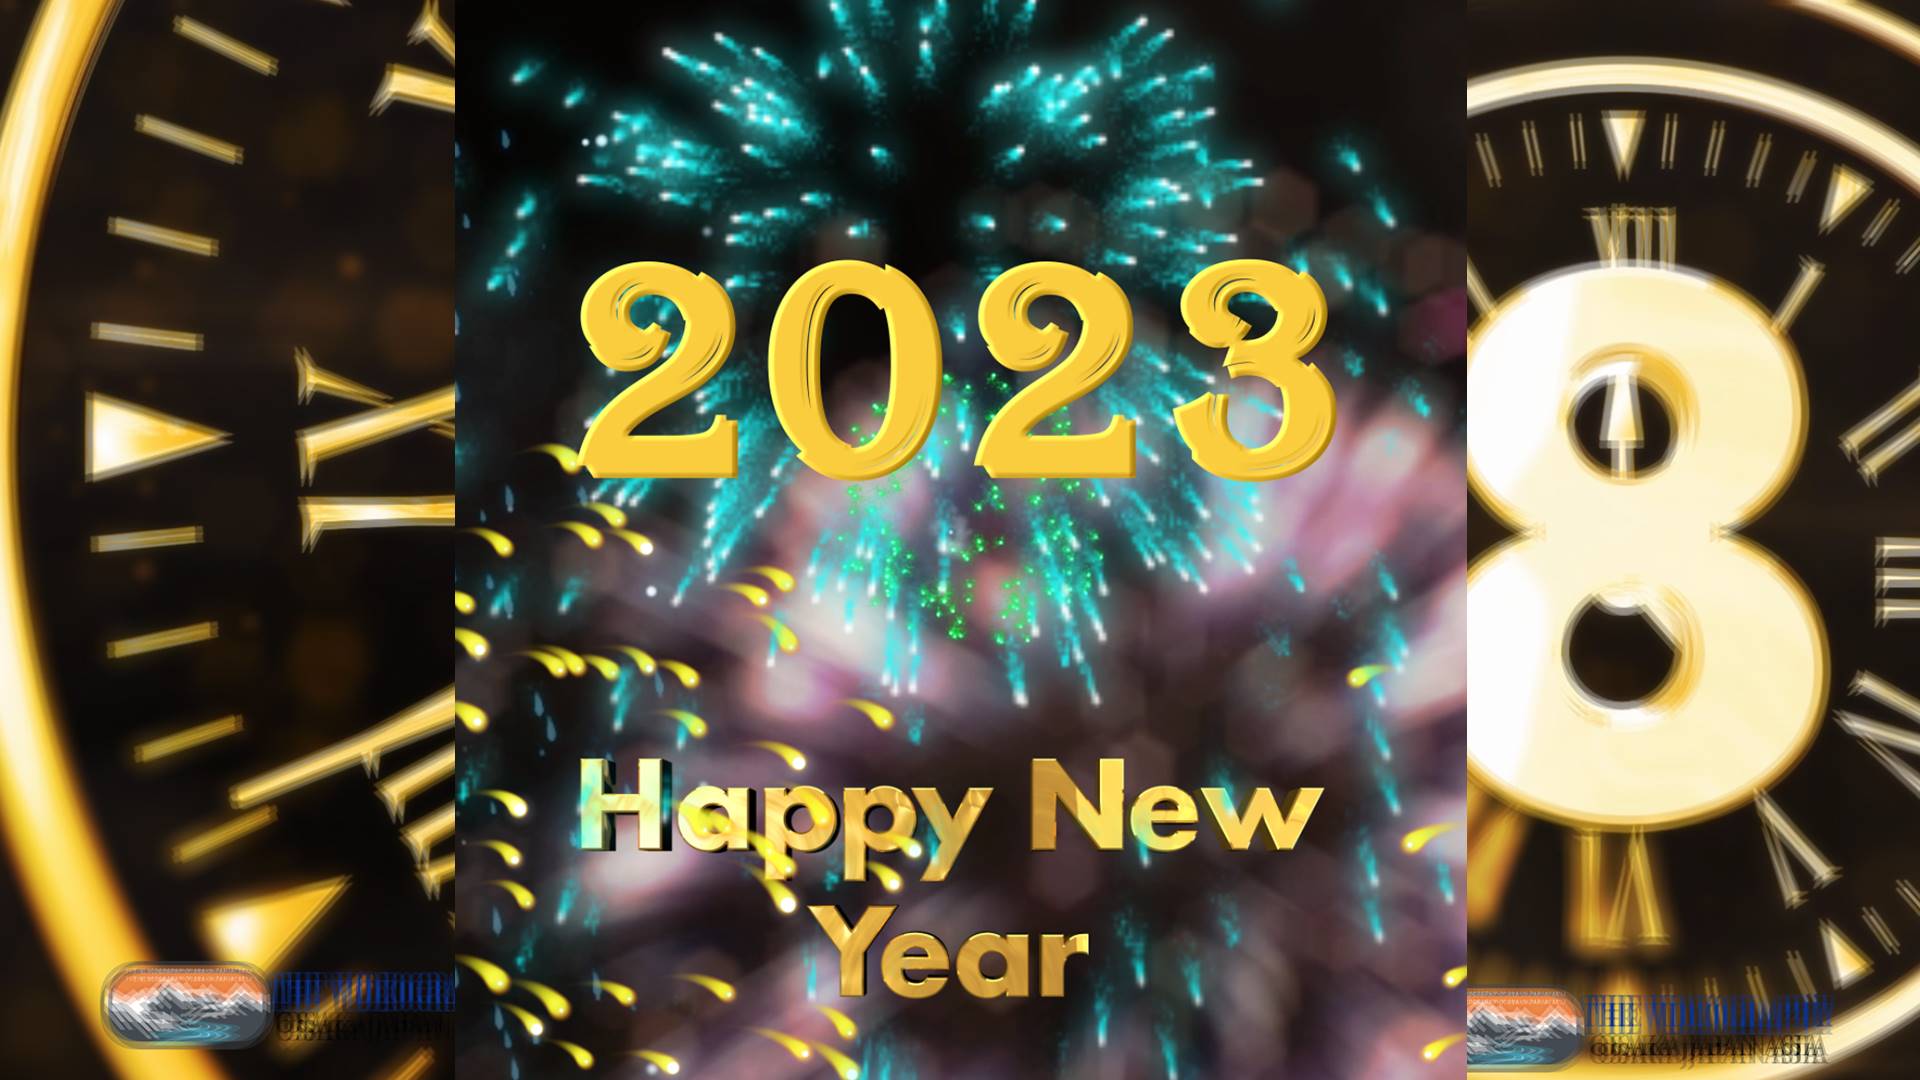 TikTok YouTube Vertical Video Happy New Year 2023 Countdown Movie